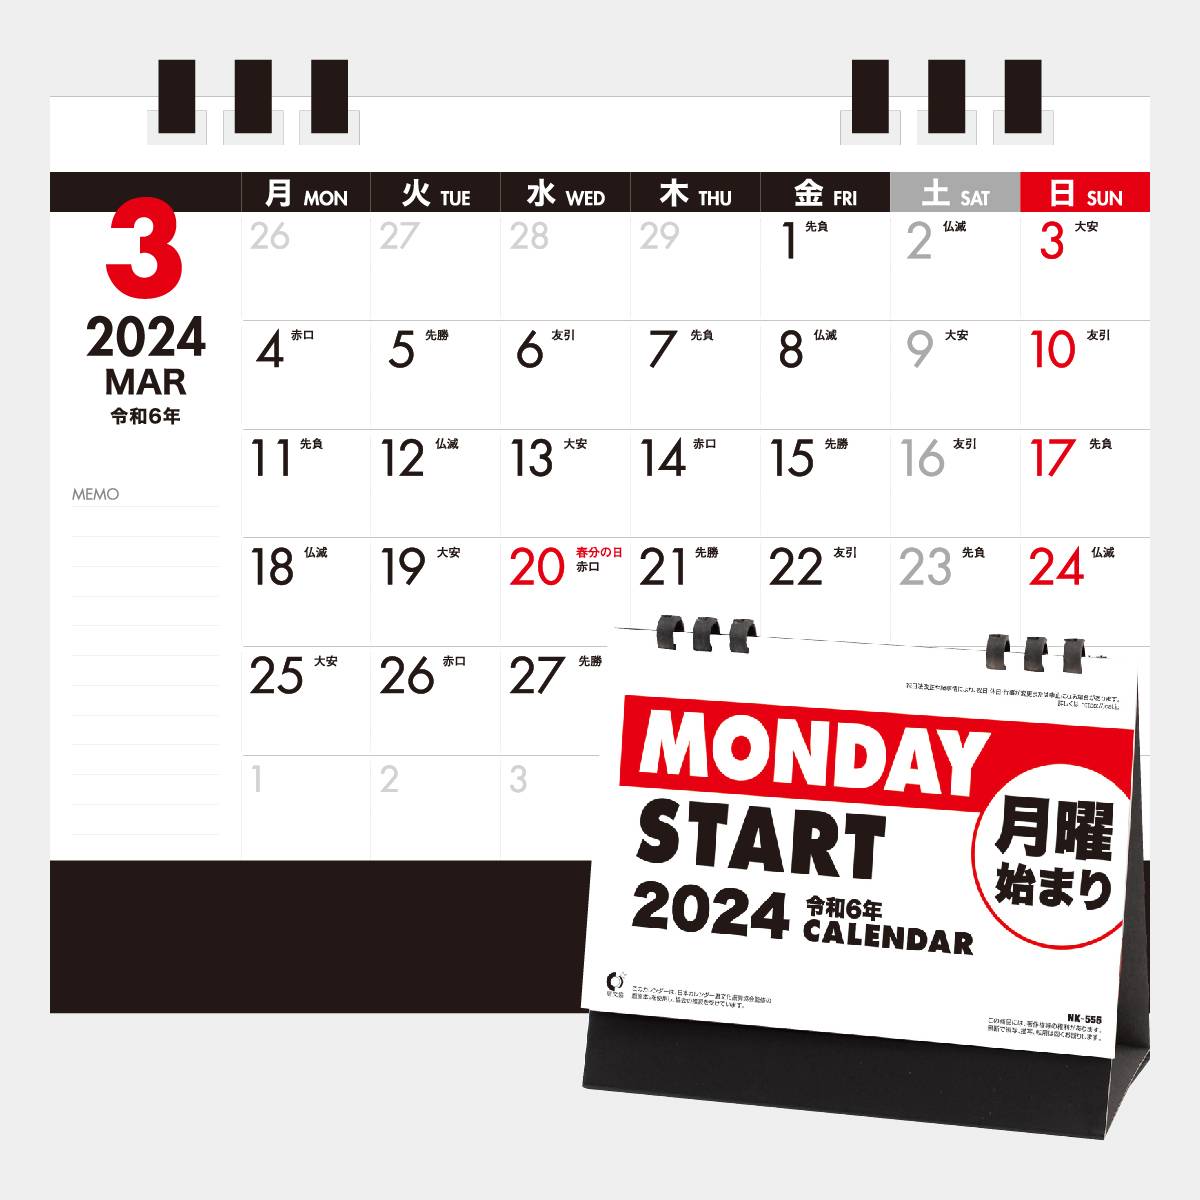 Nk 555 卓上カレンダー 月曜始まりカレンダー 2021年版名入れカレンダーを格安で販売 名入れカレンダー印刷 Com